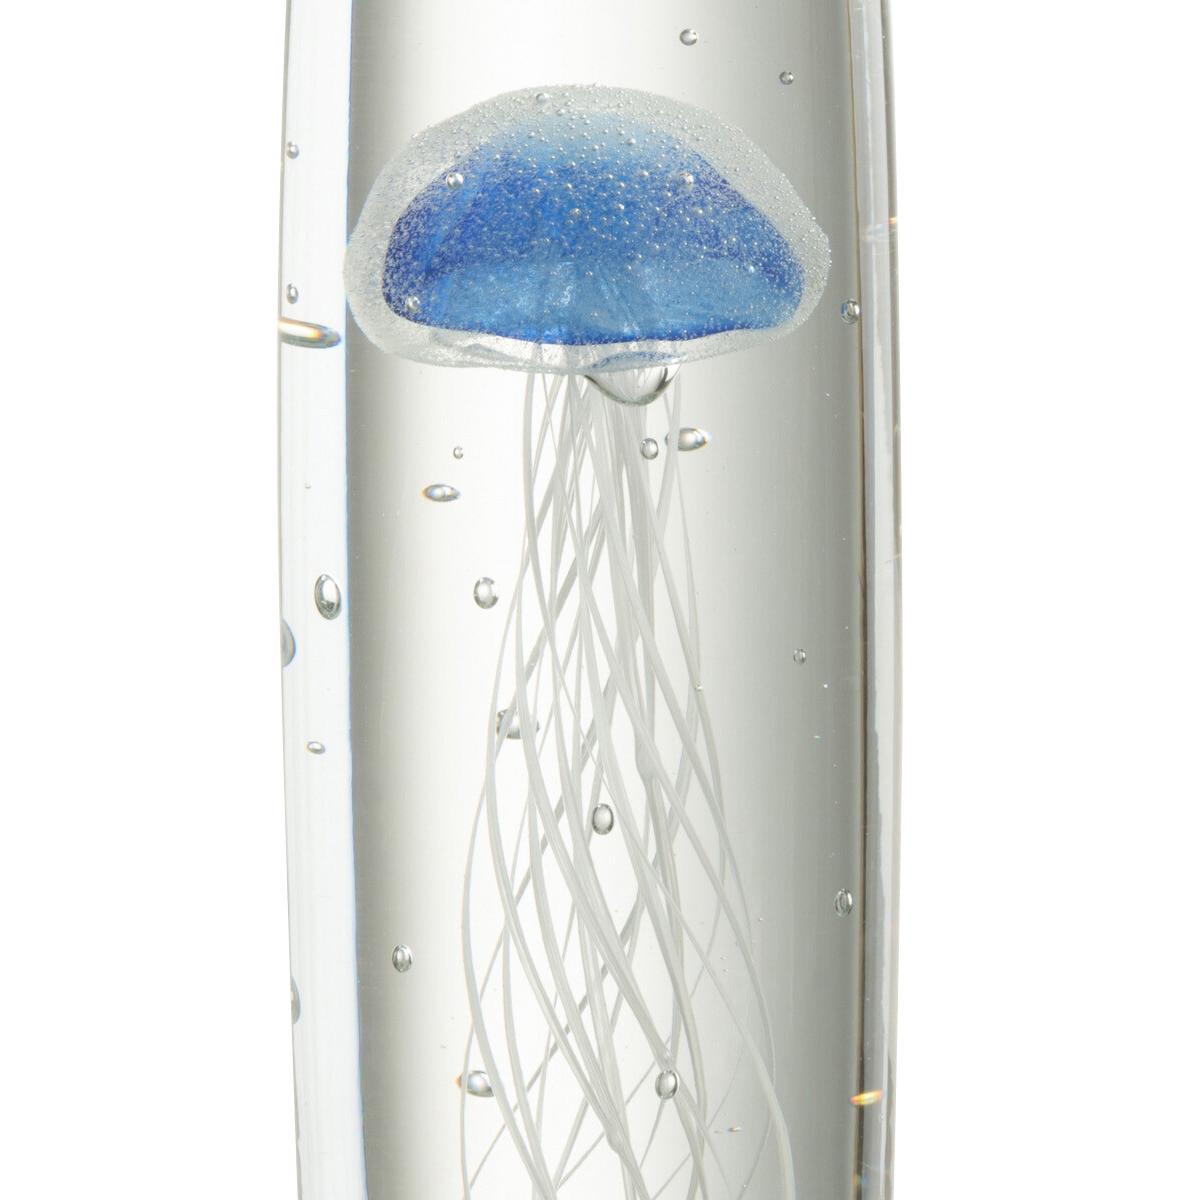 Blue jellyfish glass paperweight 17 cm